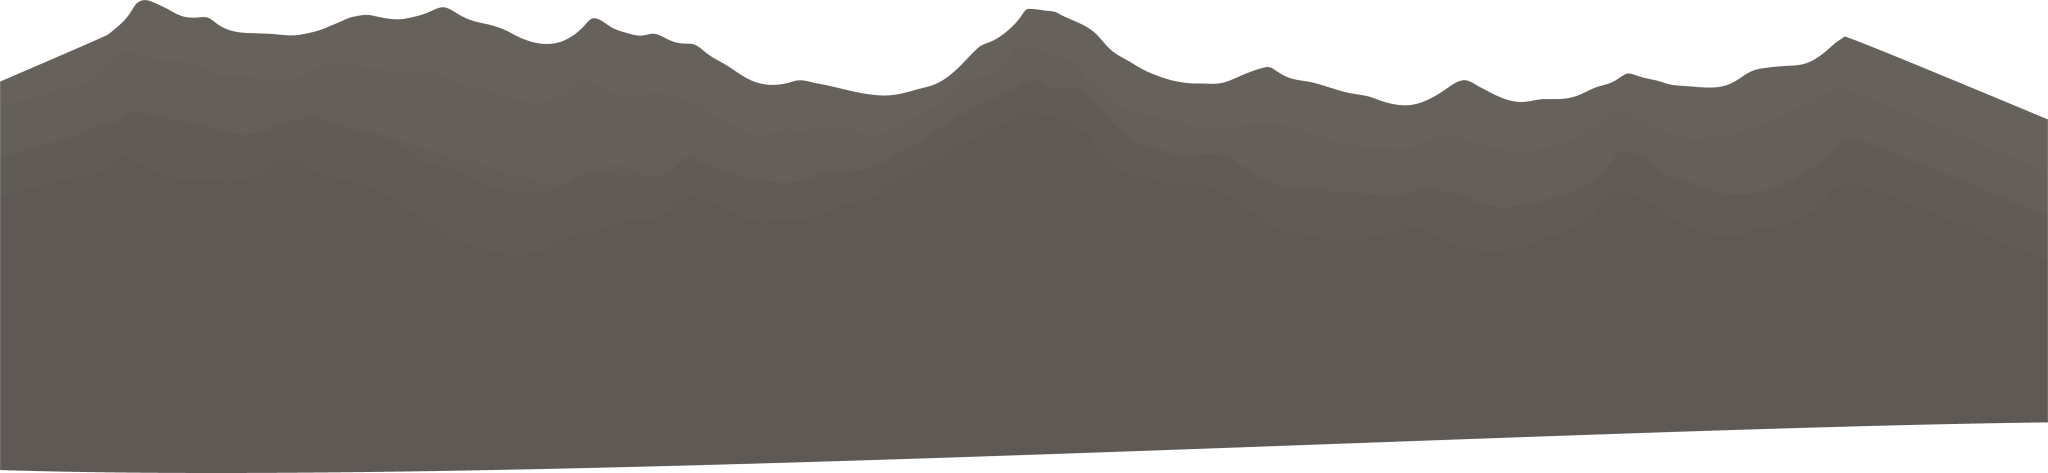 Gingiskhan Gebirge